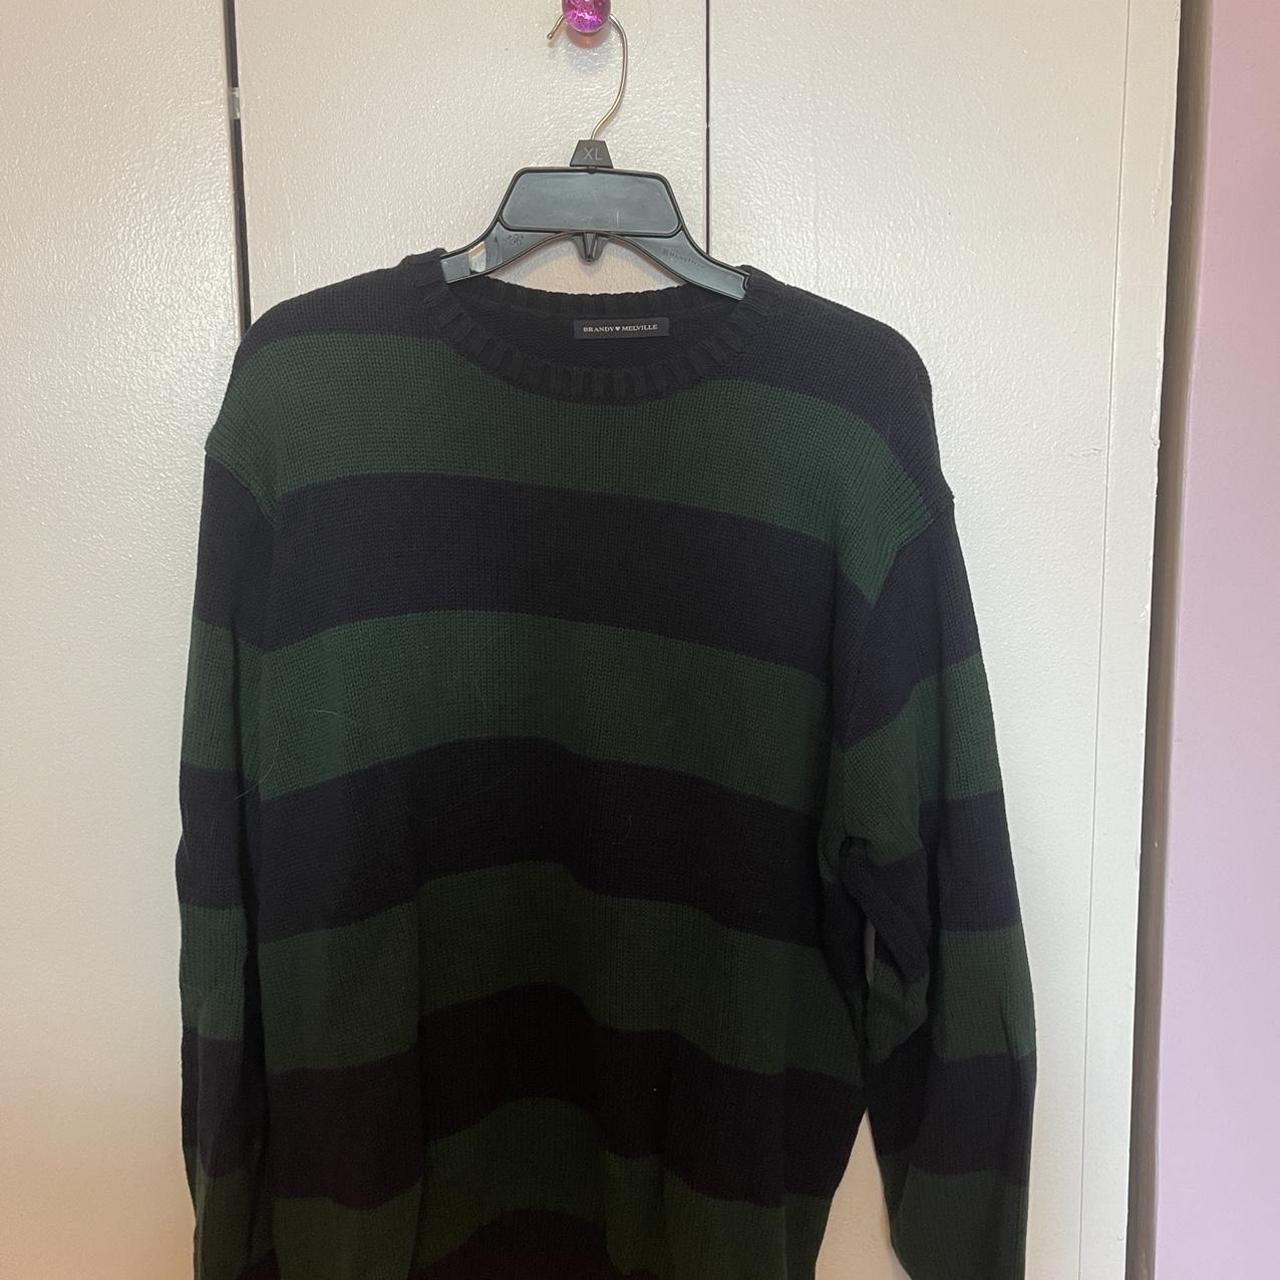 Brandy Melville popular Brianna sweater #brandymelville - Depop